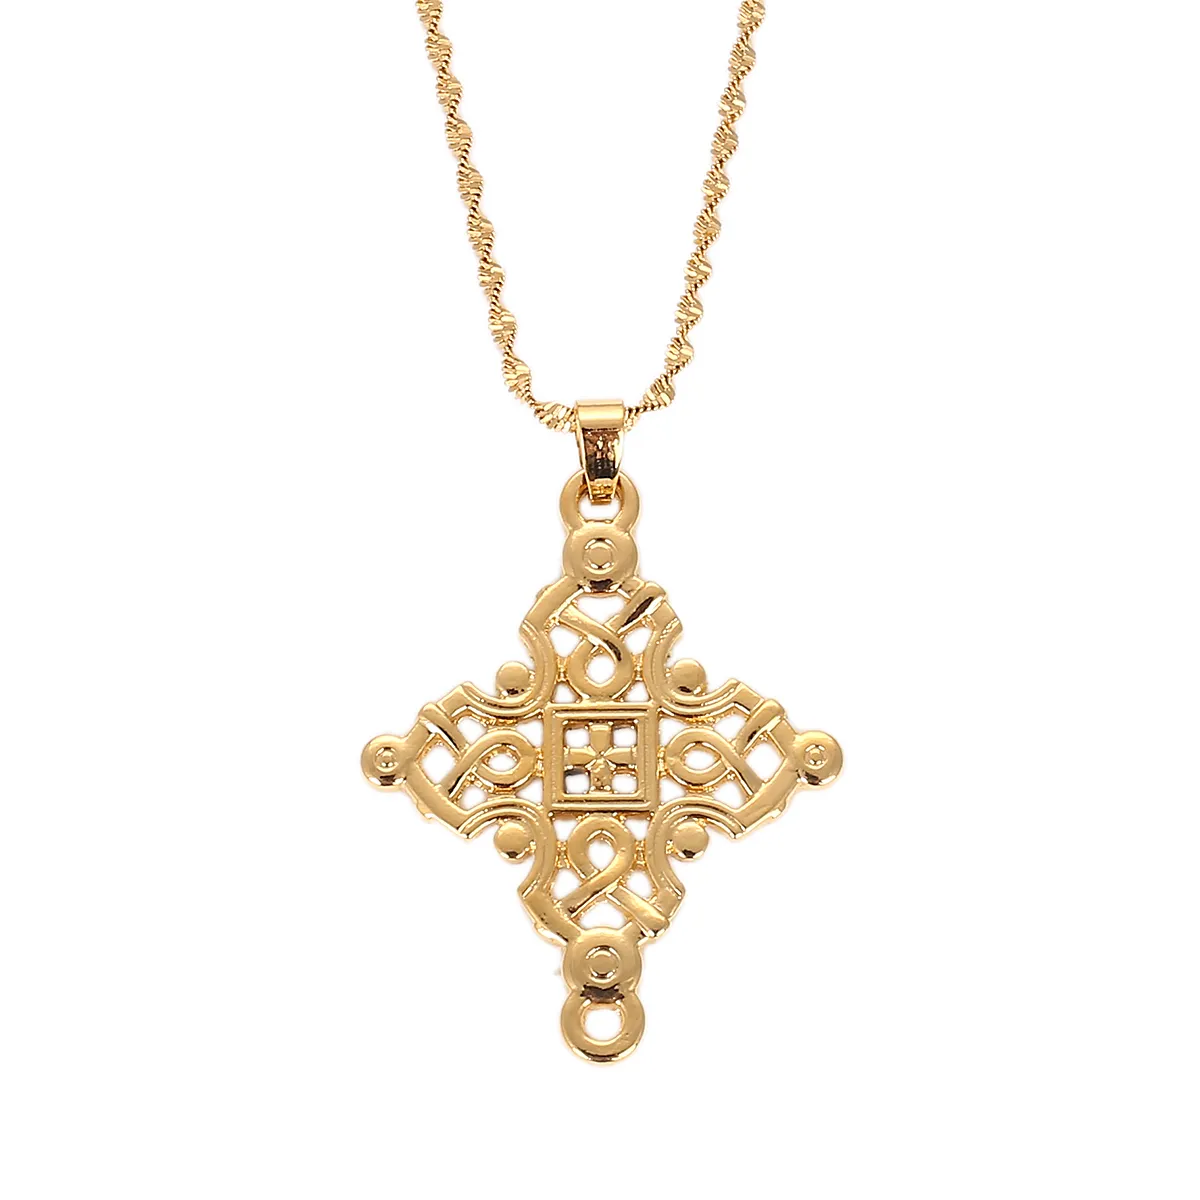 Big Gold Cross Necklaces For Women Men Ethiopian Crosses Charm Pendant Religion Jewelry Gifts